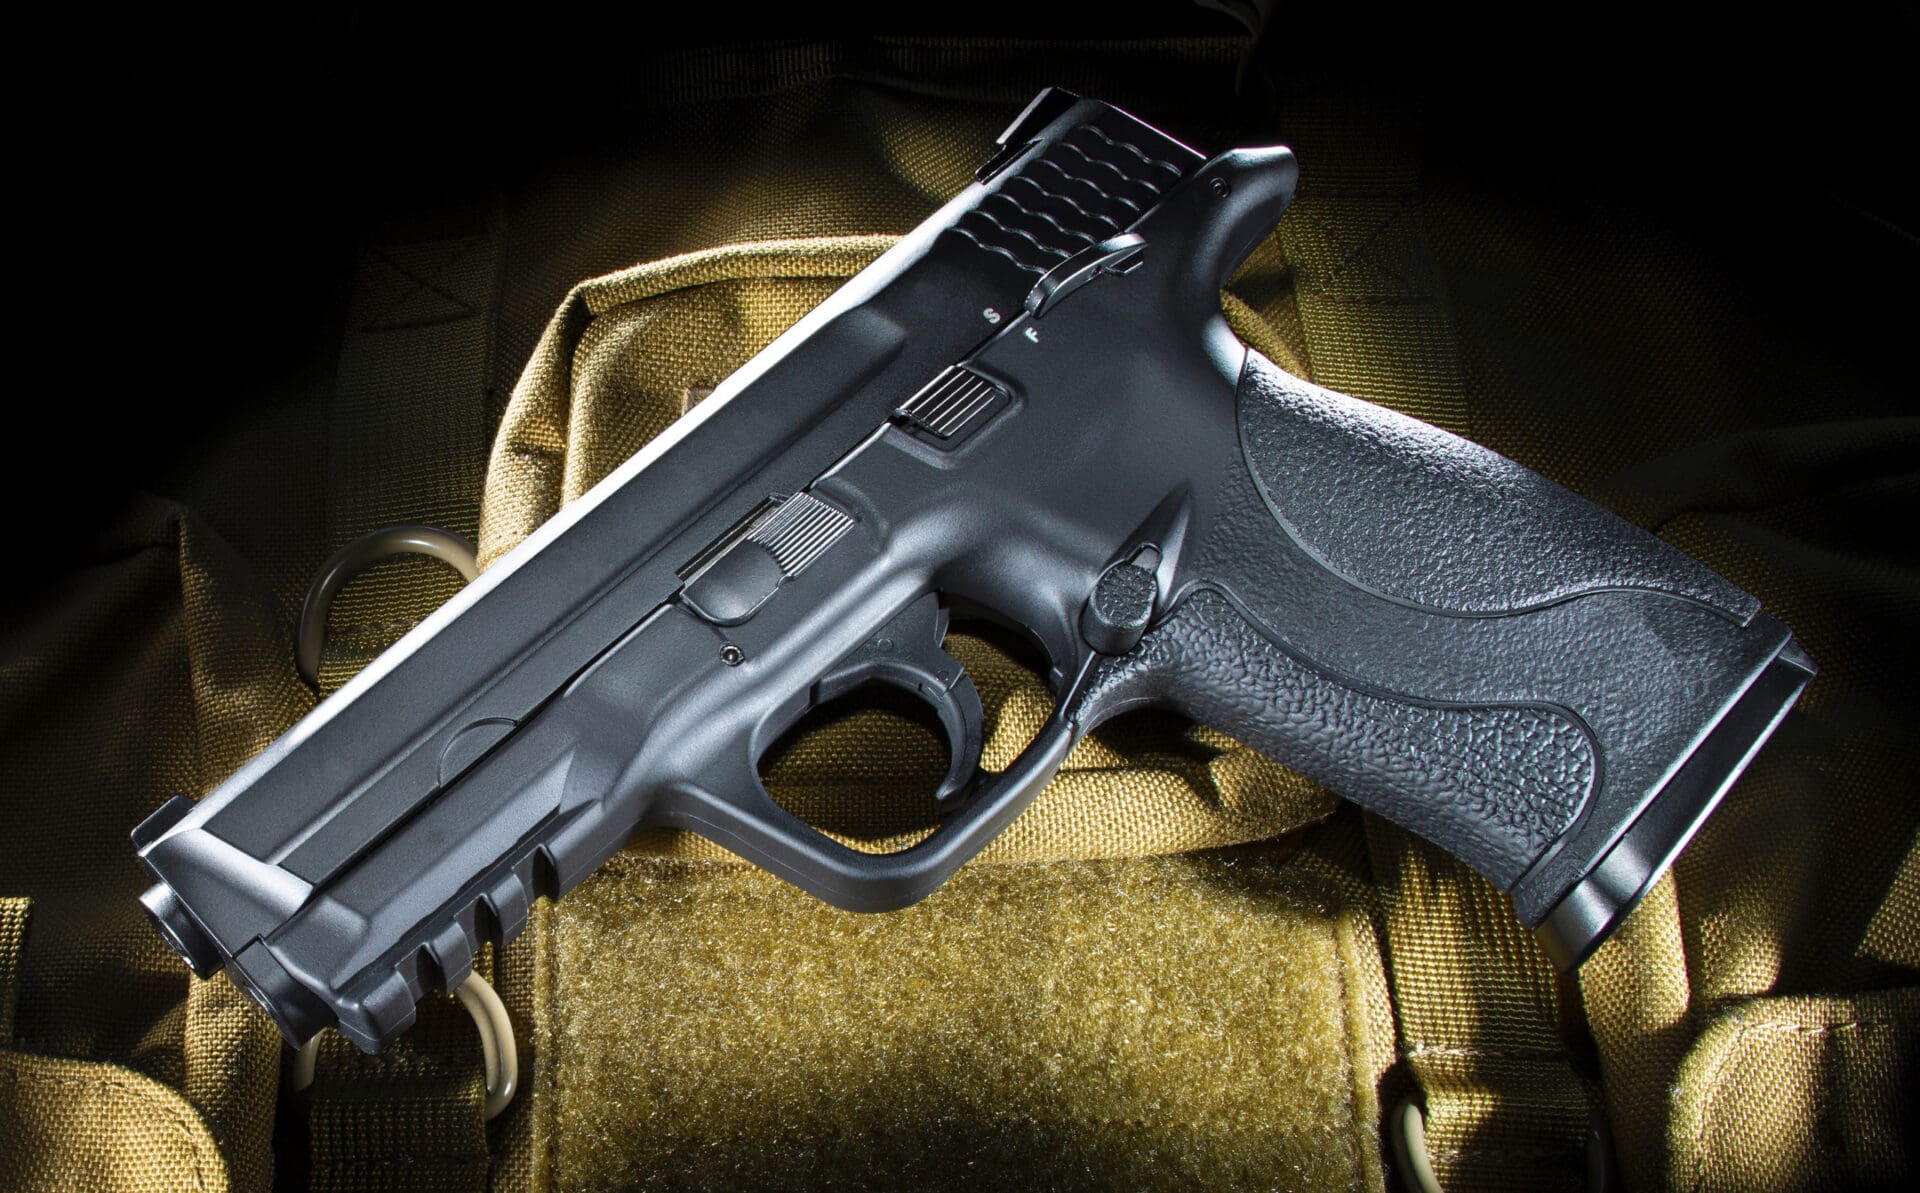 Black Semi Automatic Handgun With Polymer Frame On A Beige Bag